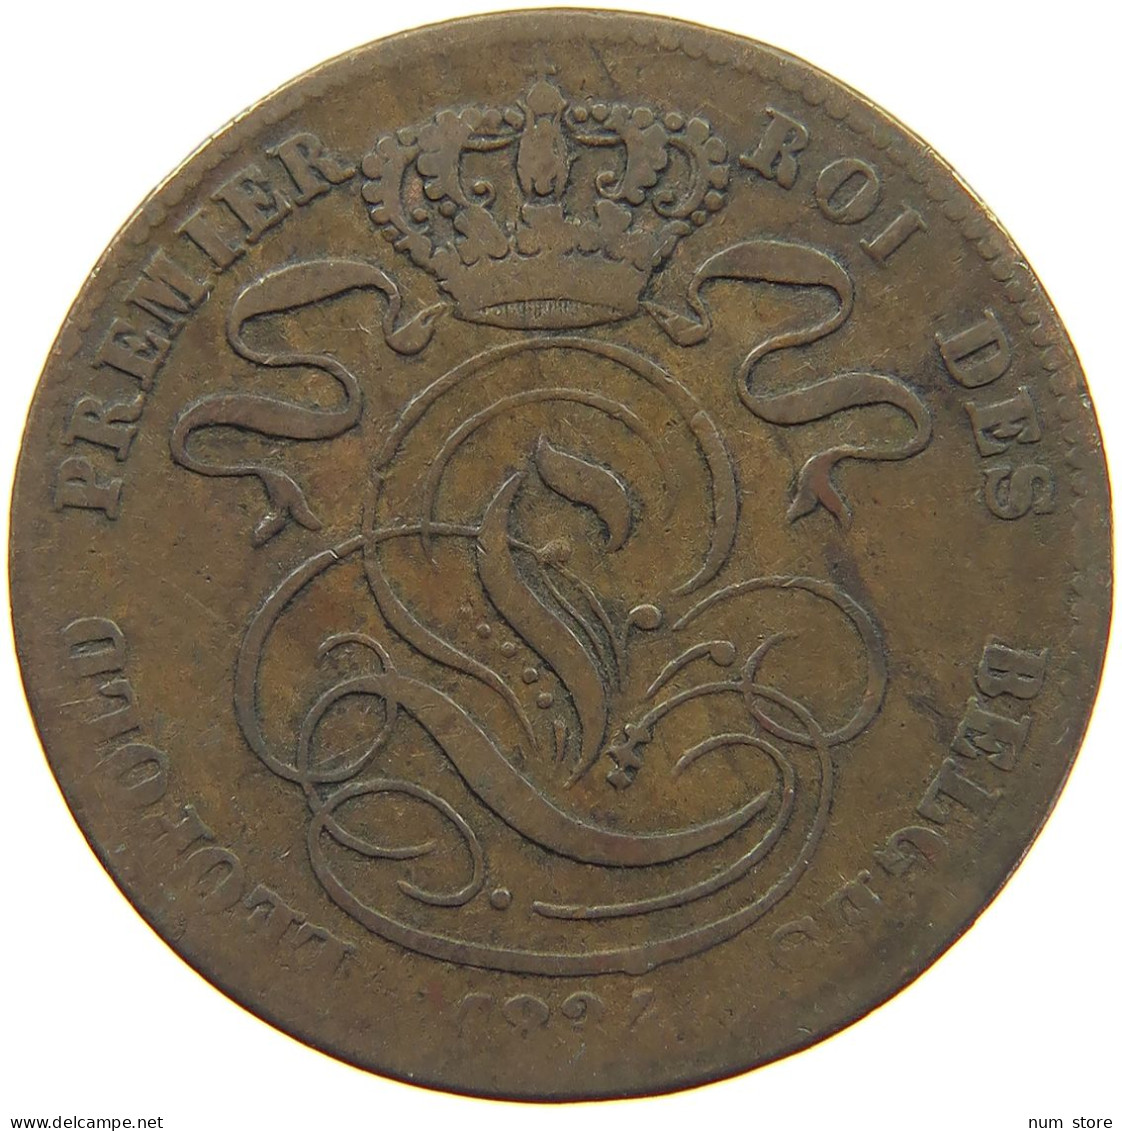 BELGIUM 5 CENTIMES 1834 Leopold I. (1831-1865) #c052 0455 - 5 Cents